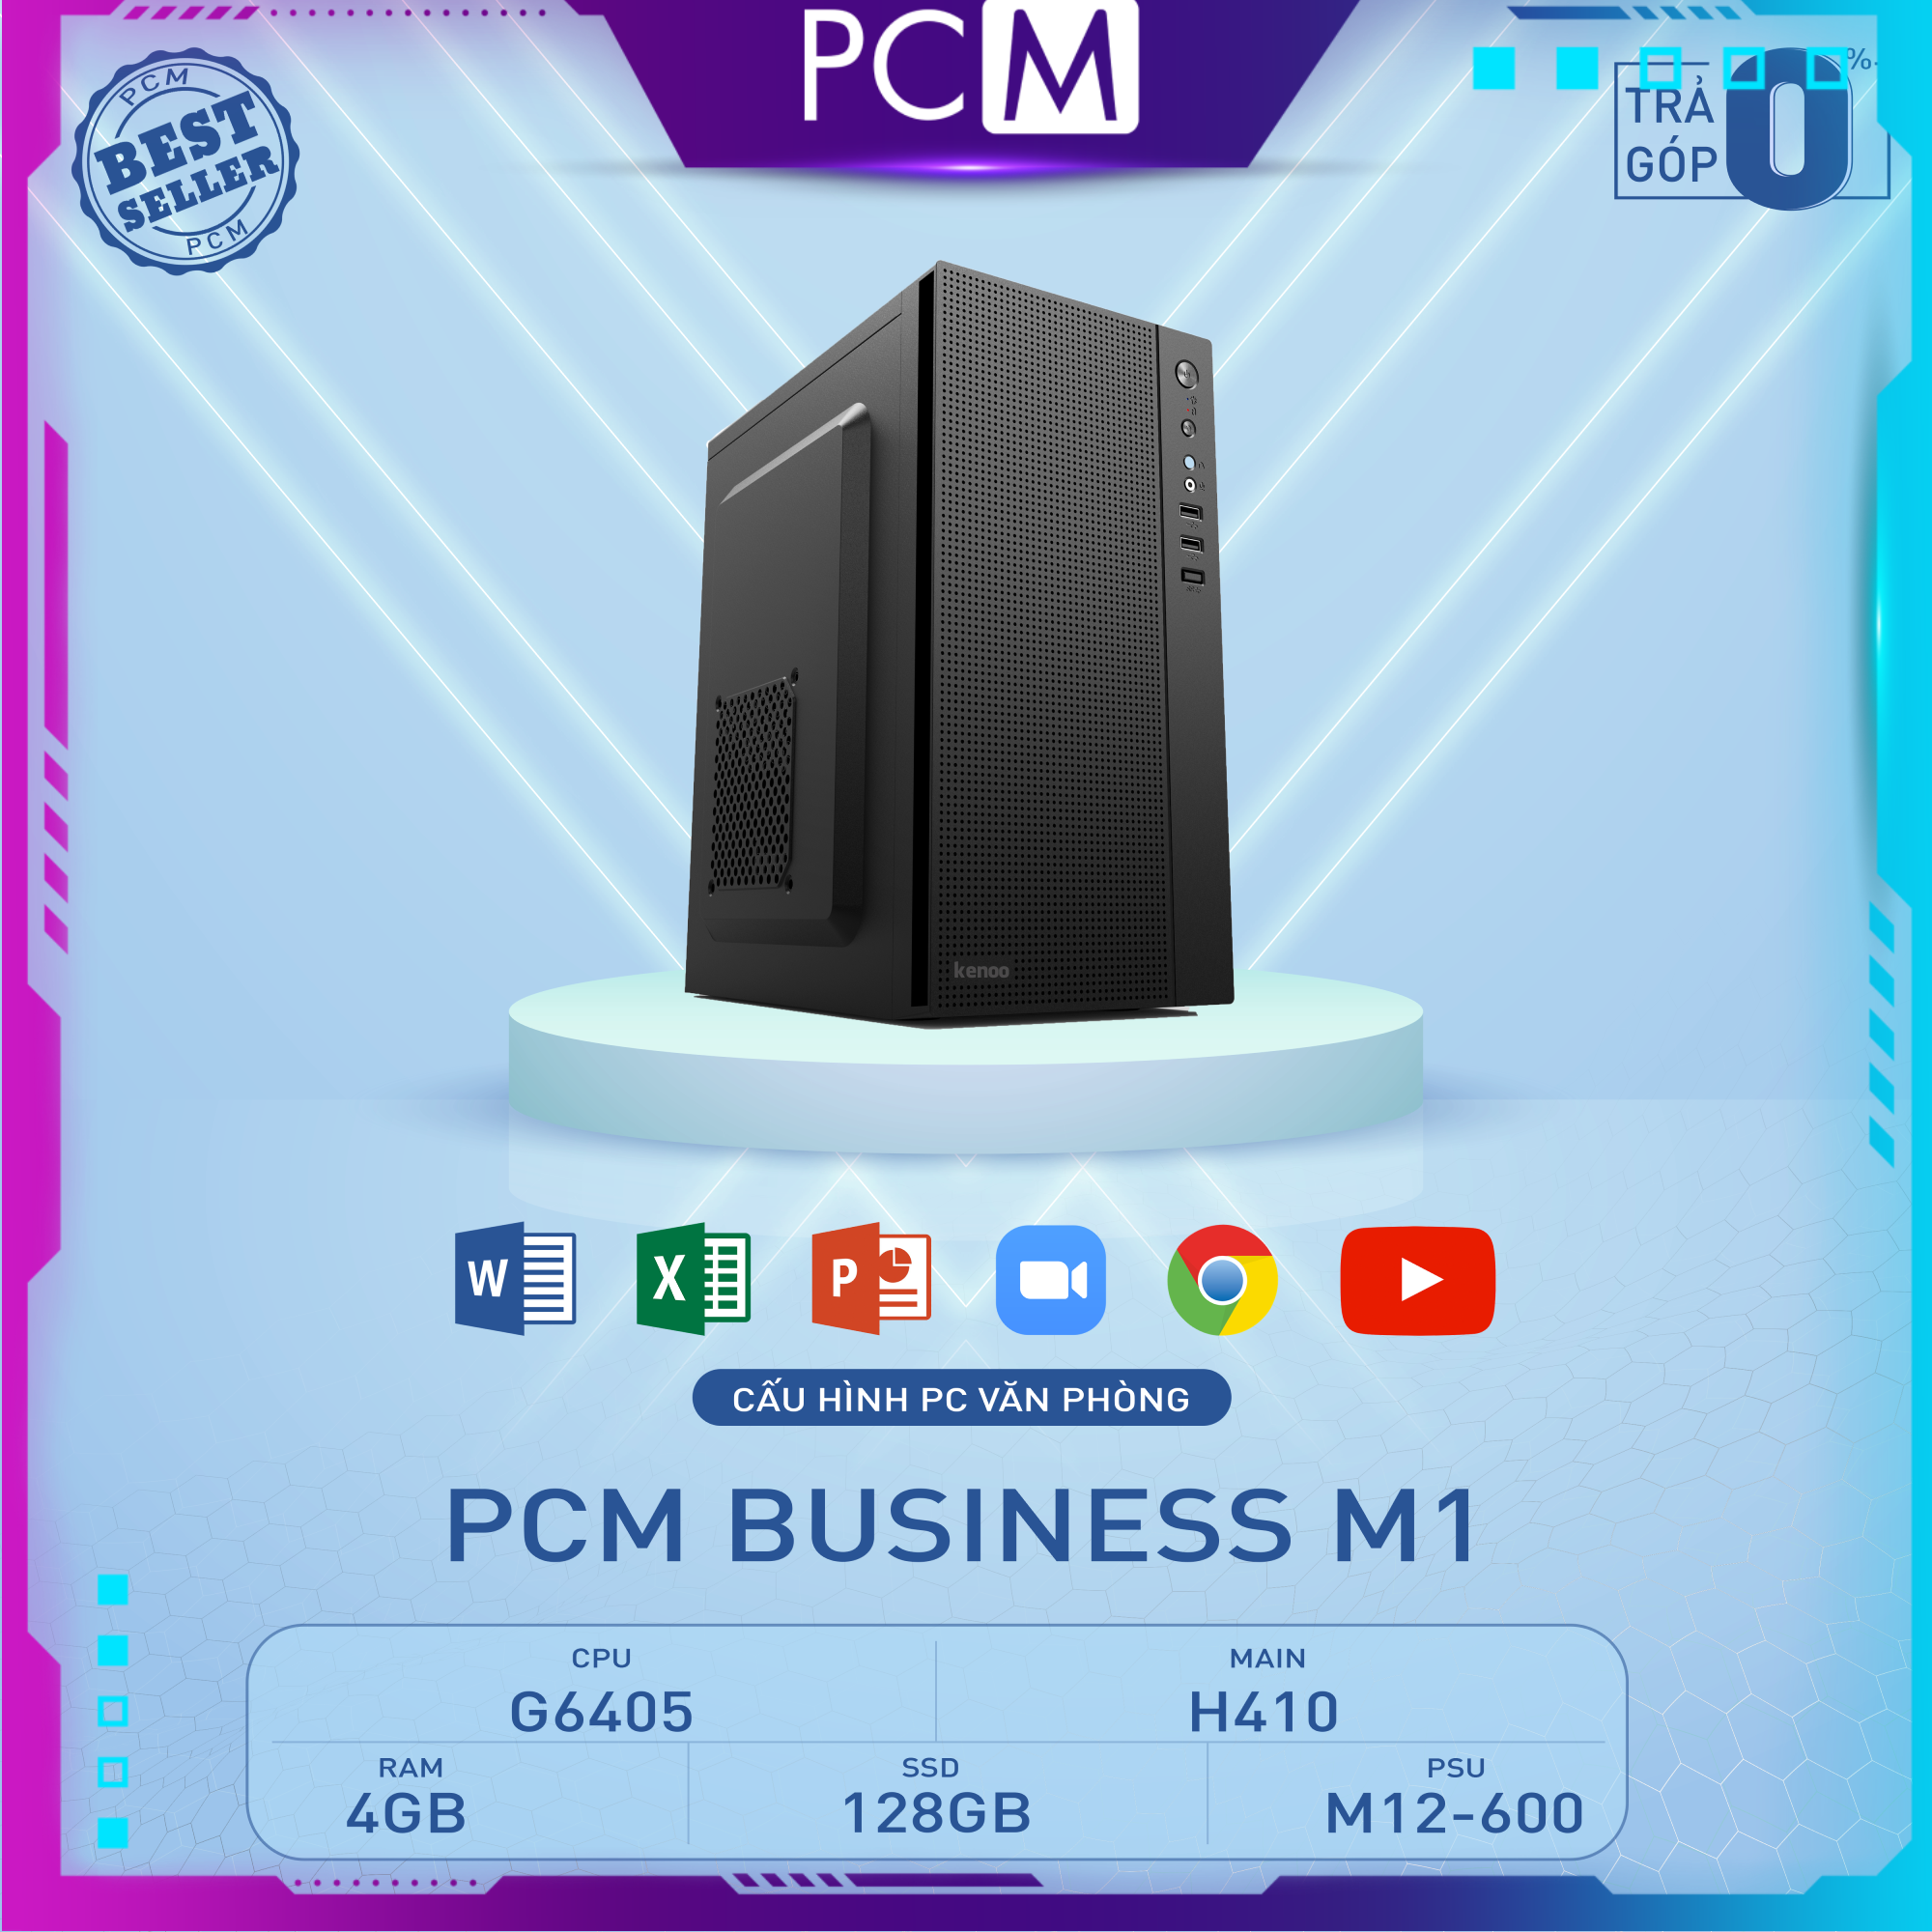 PCM BUSINESS M1 (G6405/H410/4GB RAM/128GB SSD)